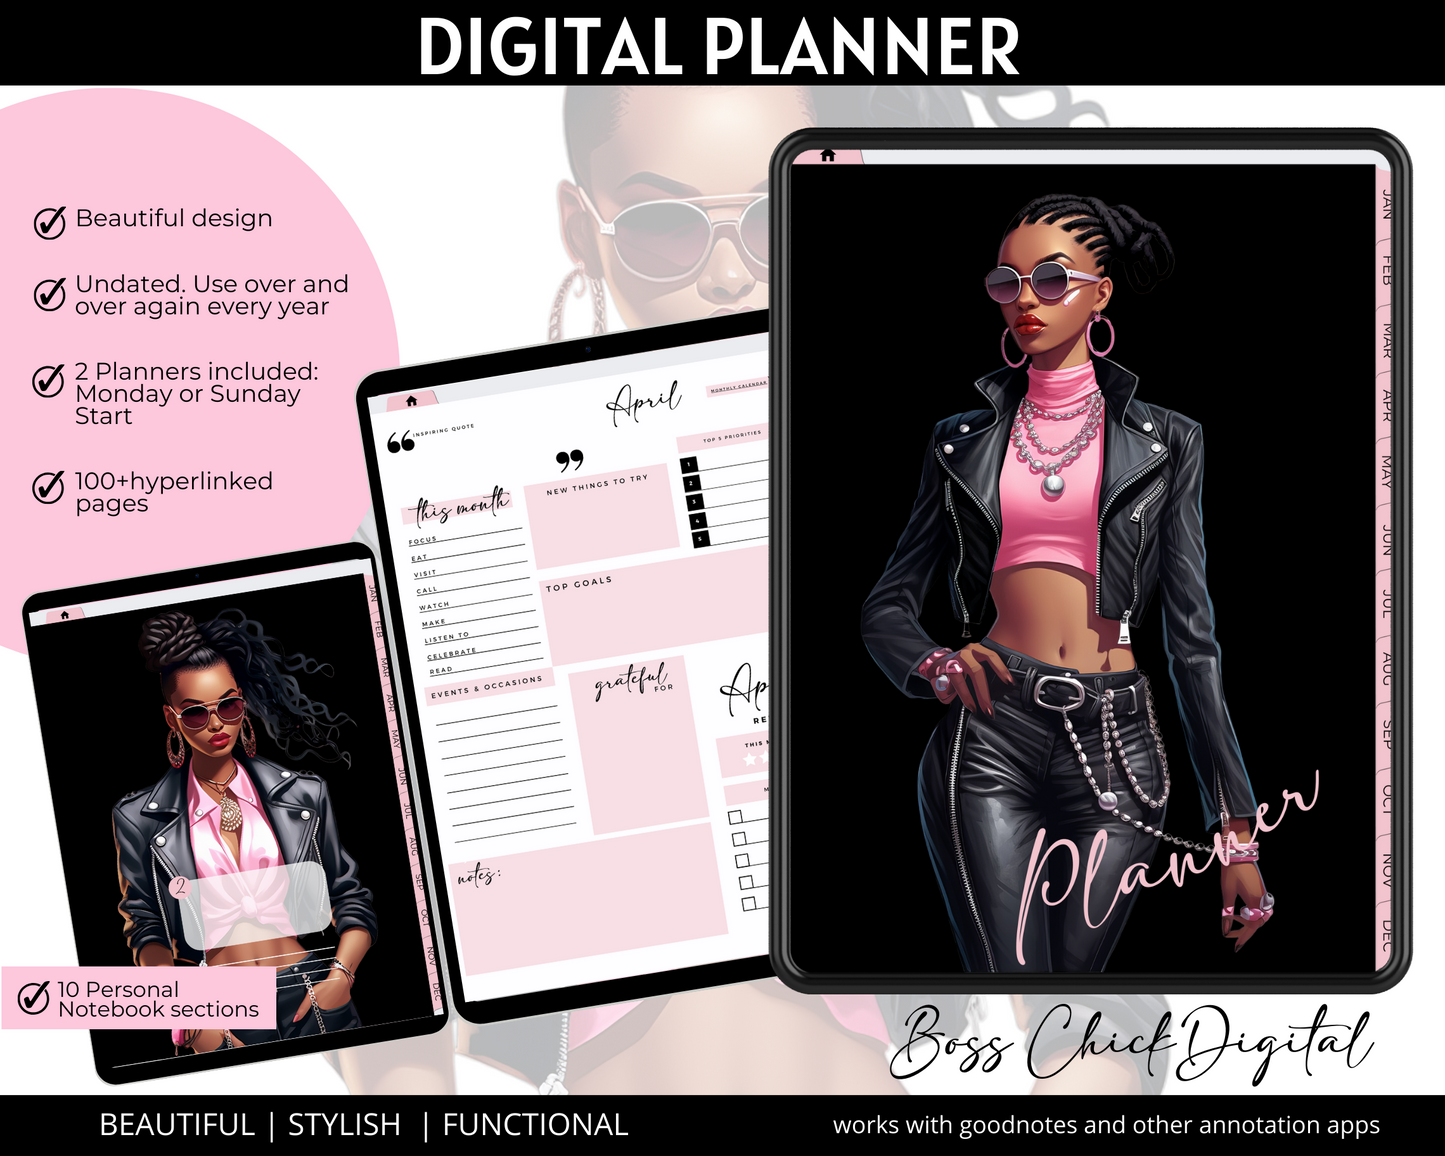 Digital Planner iPad Planner Goodnotes Planner, African American Girl Boss Lady Digital Planner Functional iPad Digital planner, Notability Planner